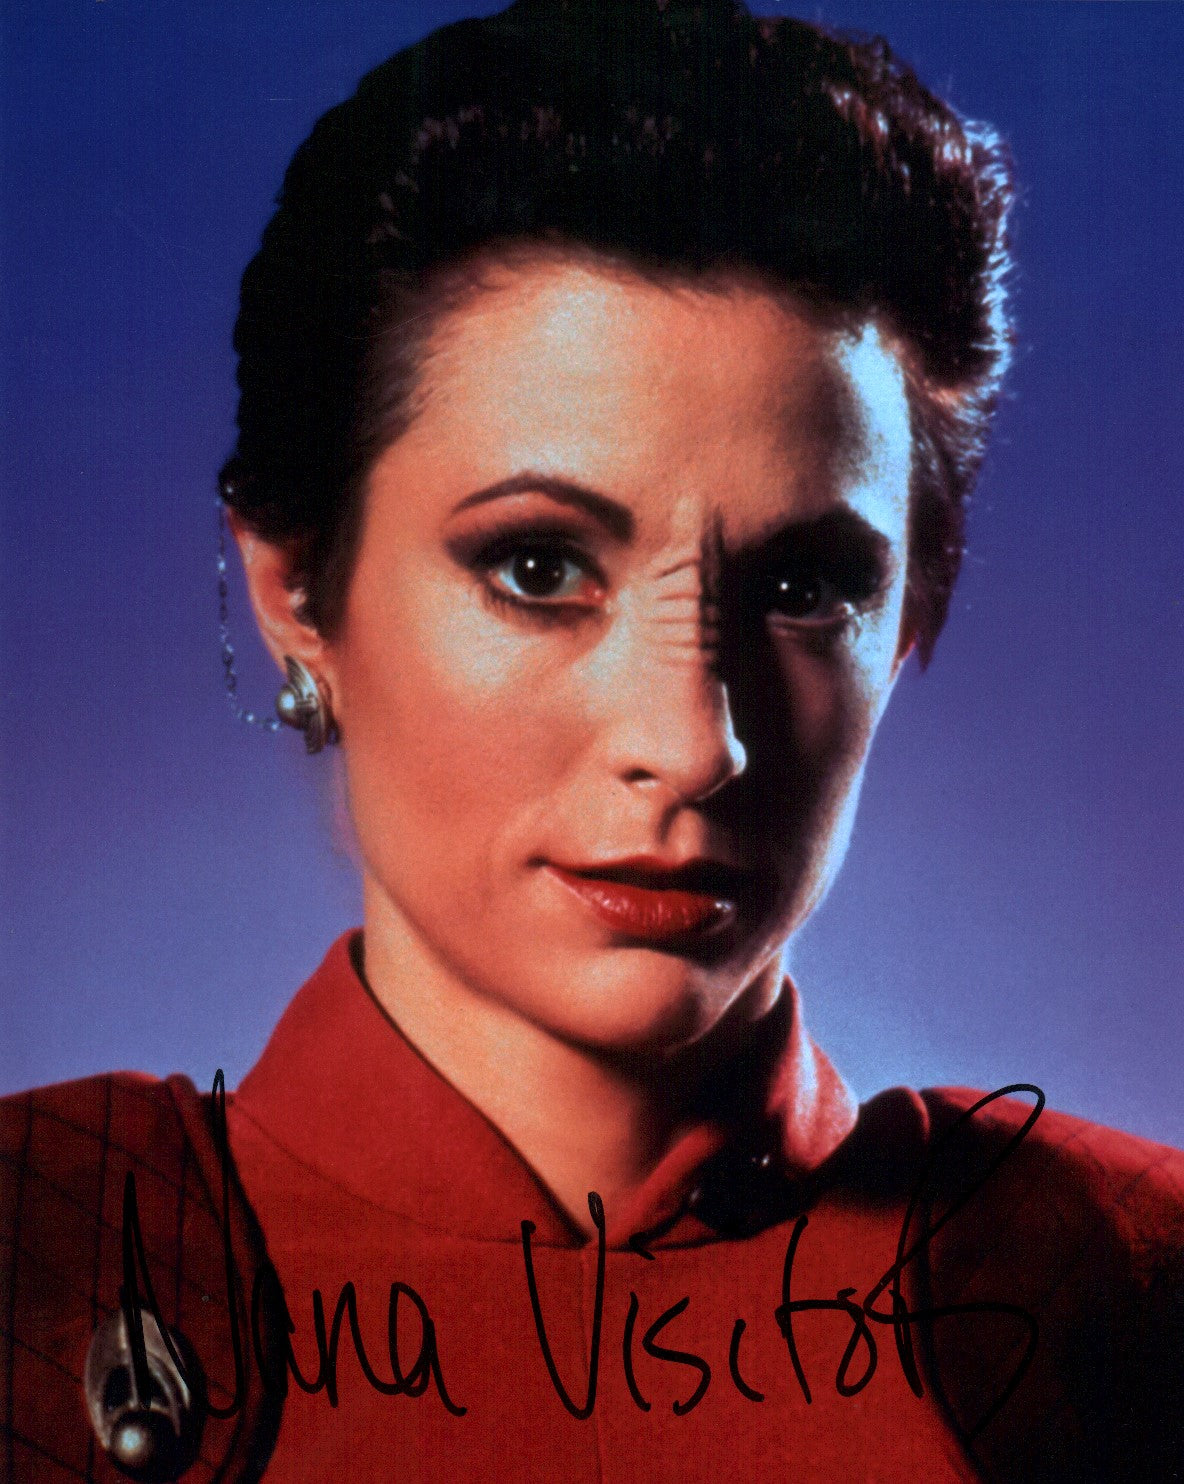 Nana Visitor Star Trek: DS9 8x10 Signed Photo JSA Certified Autograph